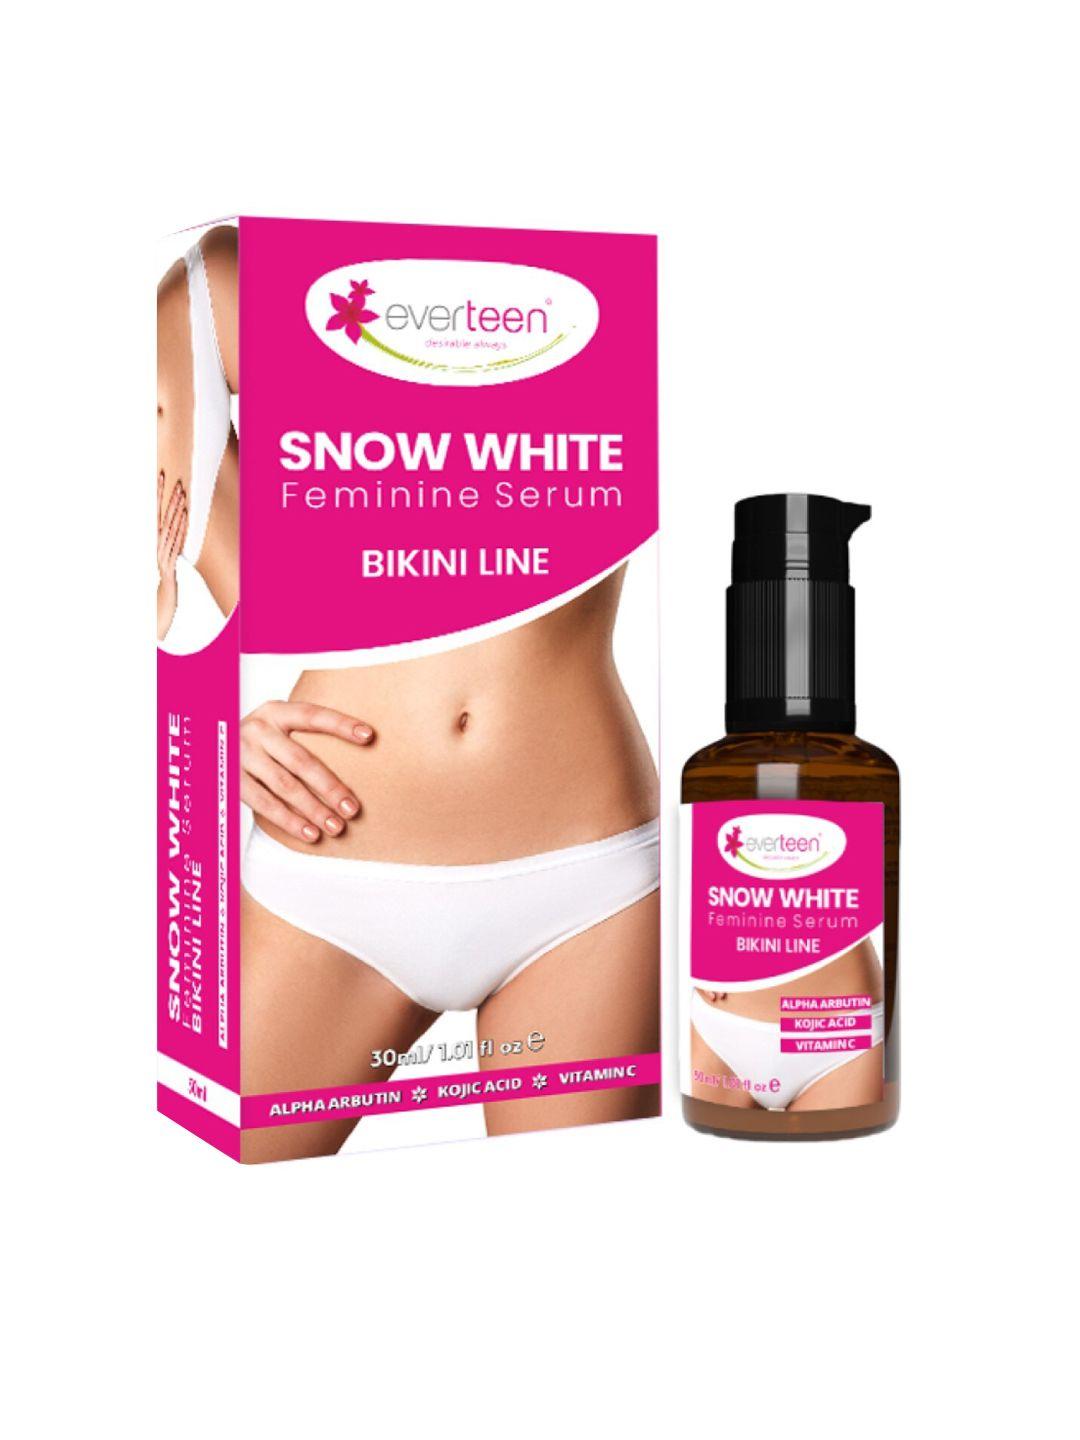 everteen snow white feminine serum for bikini line - 30 ml